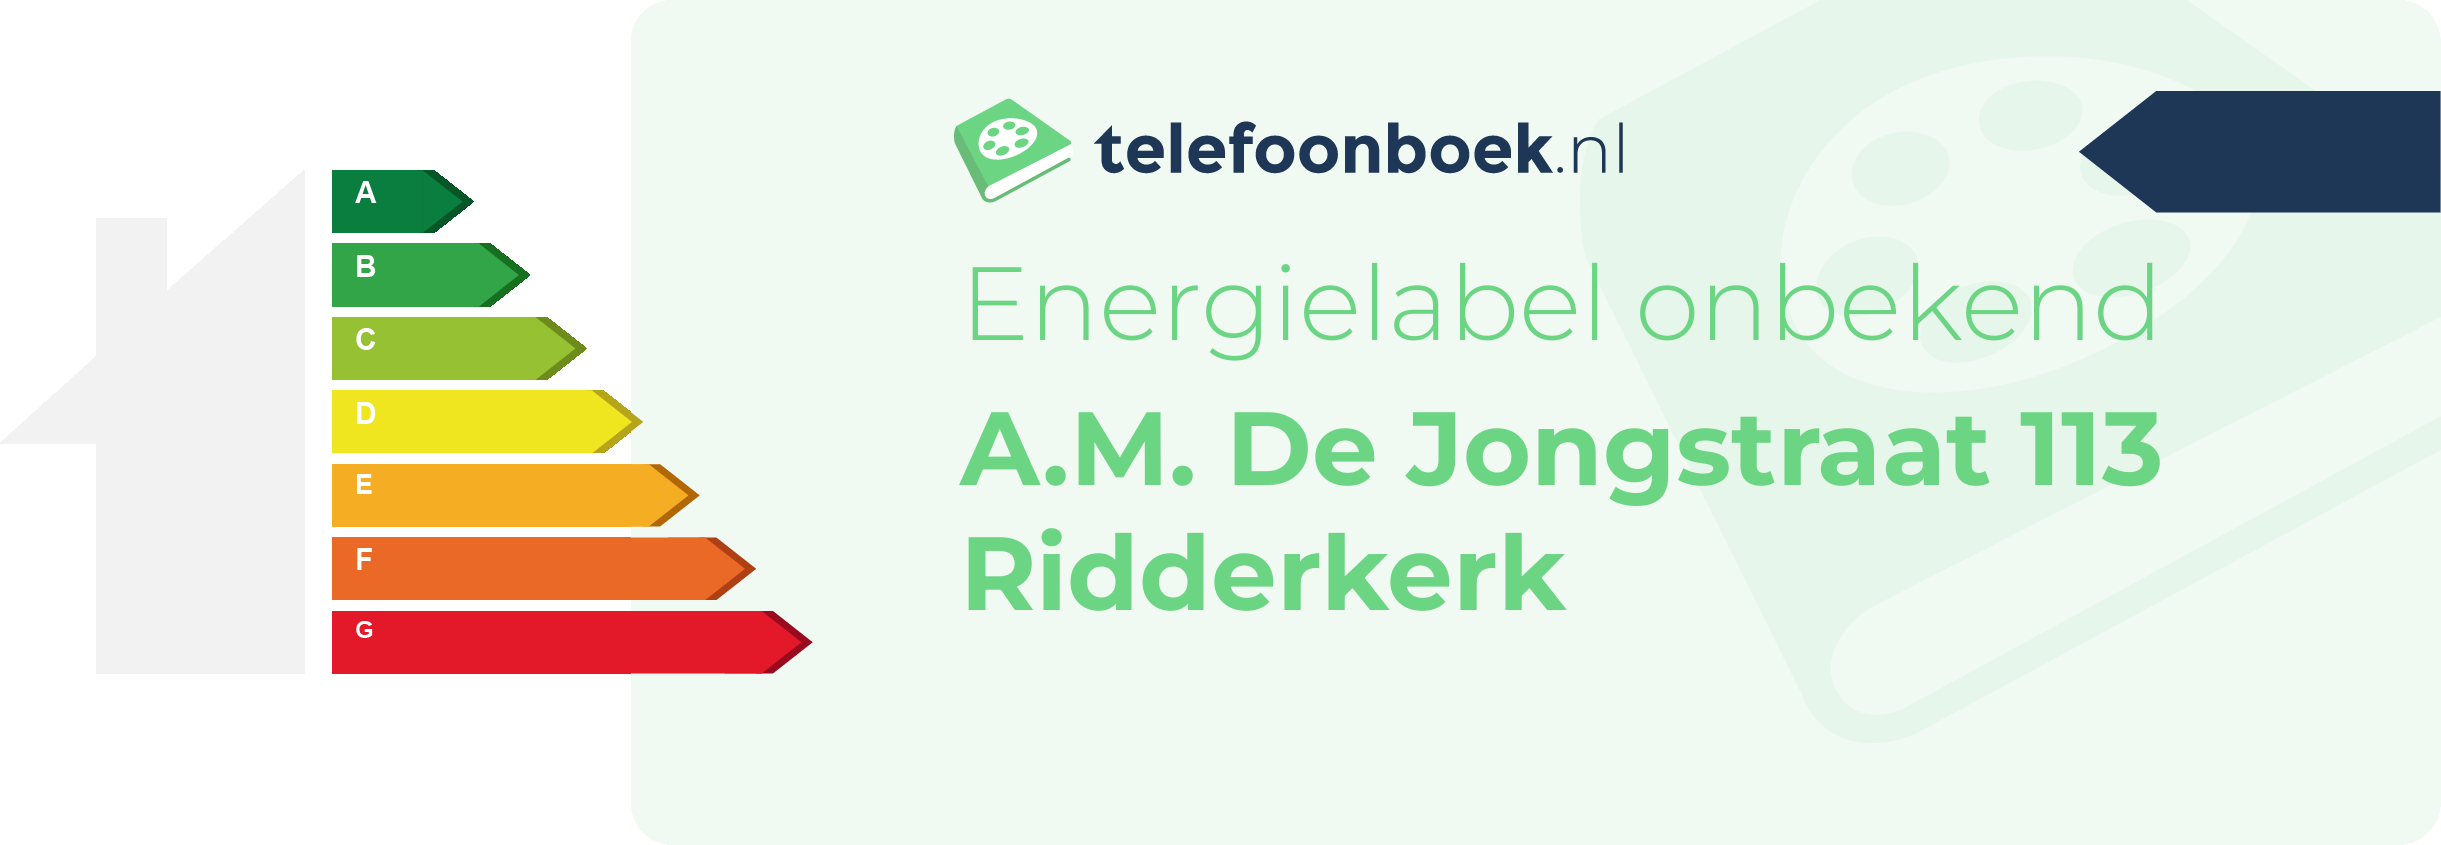 Energielabel A.M. De Jongstraat 113 Ridderkerk